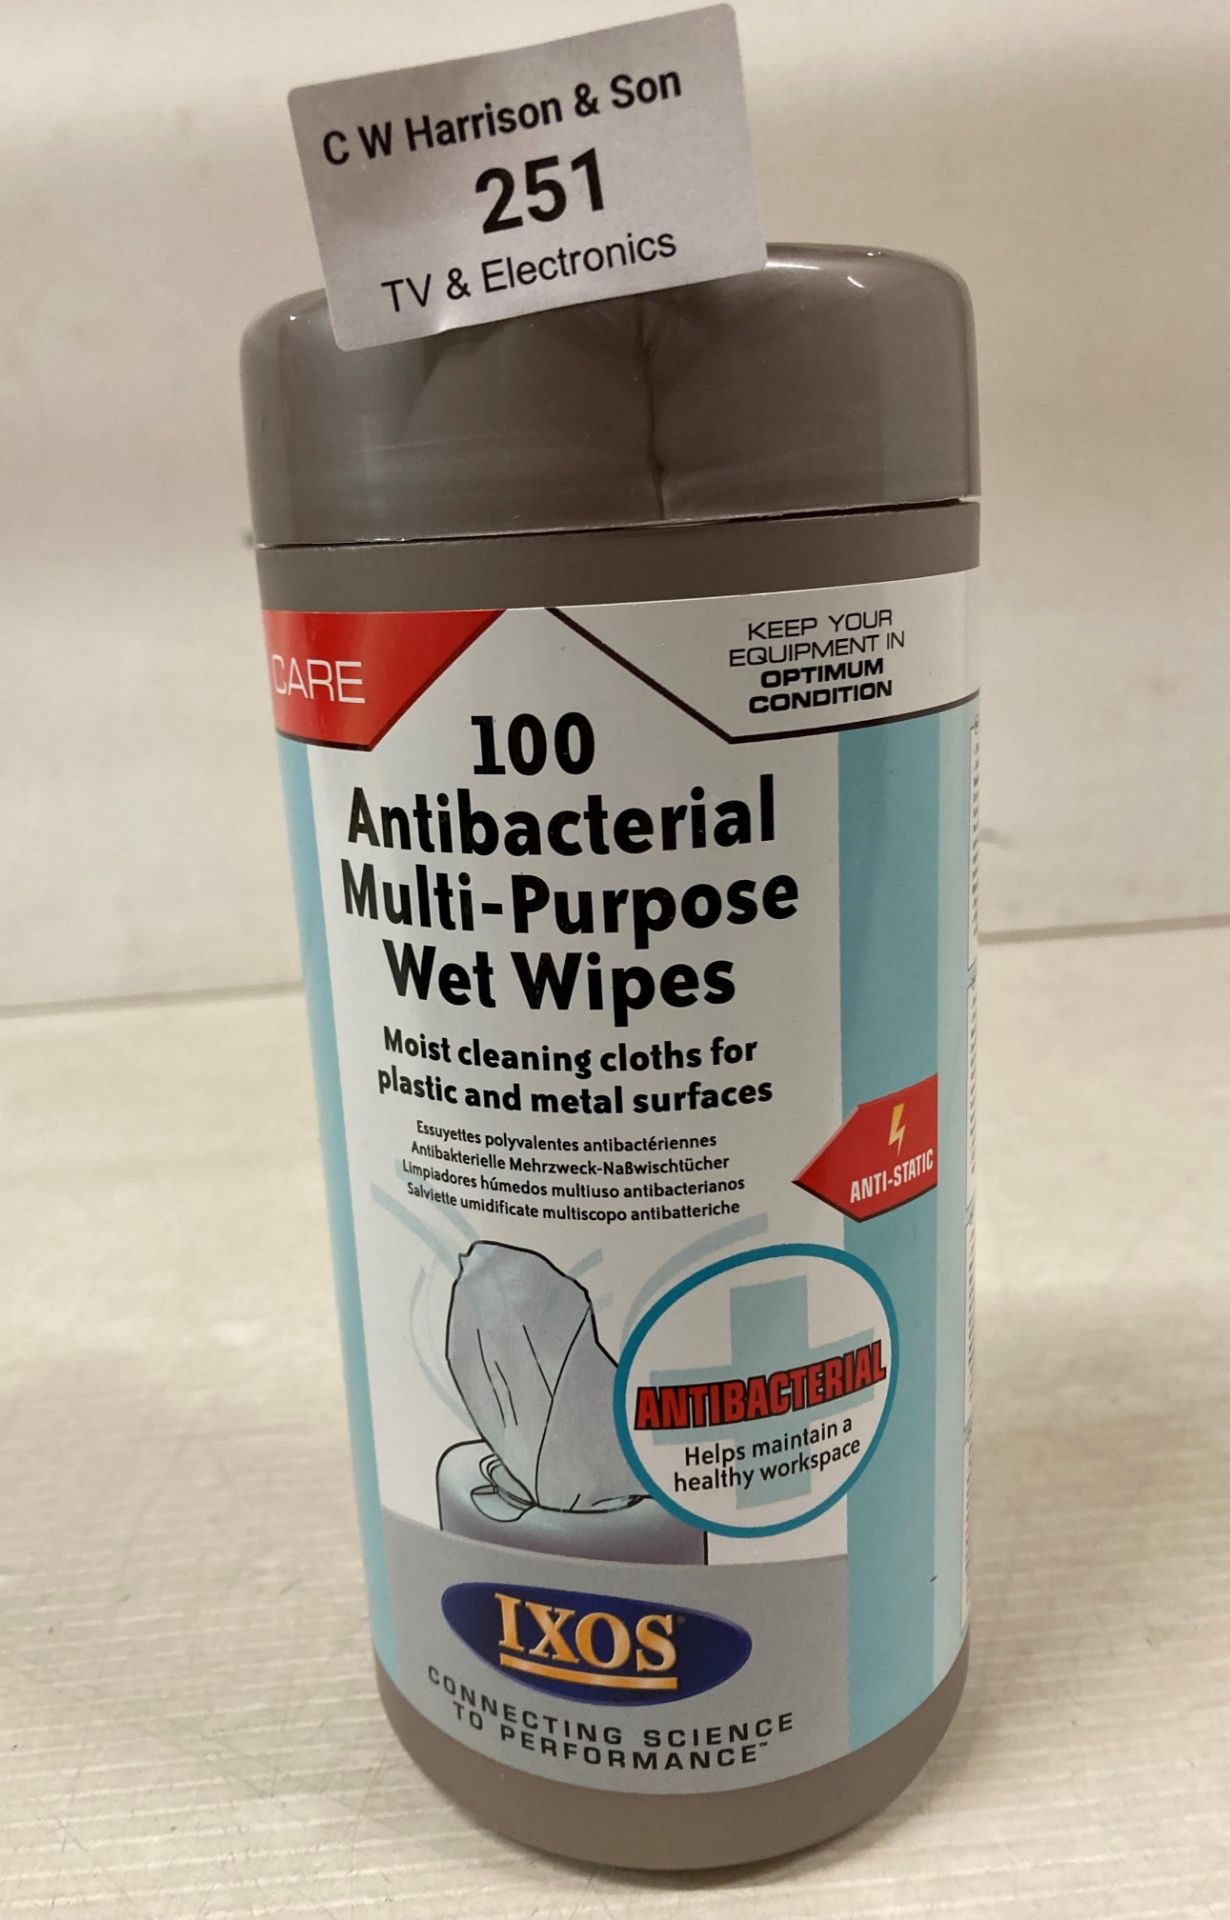 Contents to crate - 40 x tubs of IXOS Antibacterial multi-purpose wet wipes (G08 FLOOR)